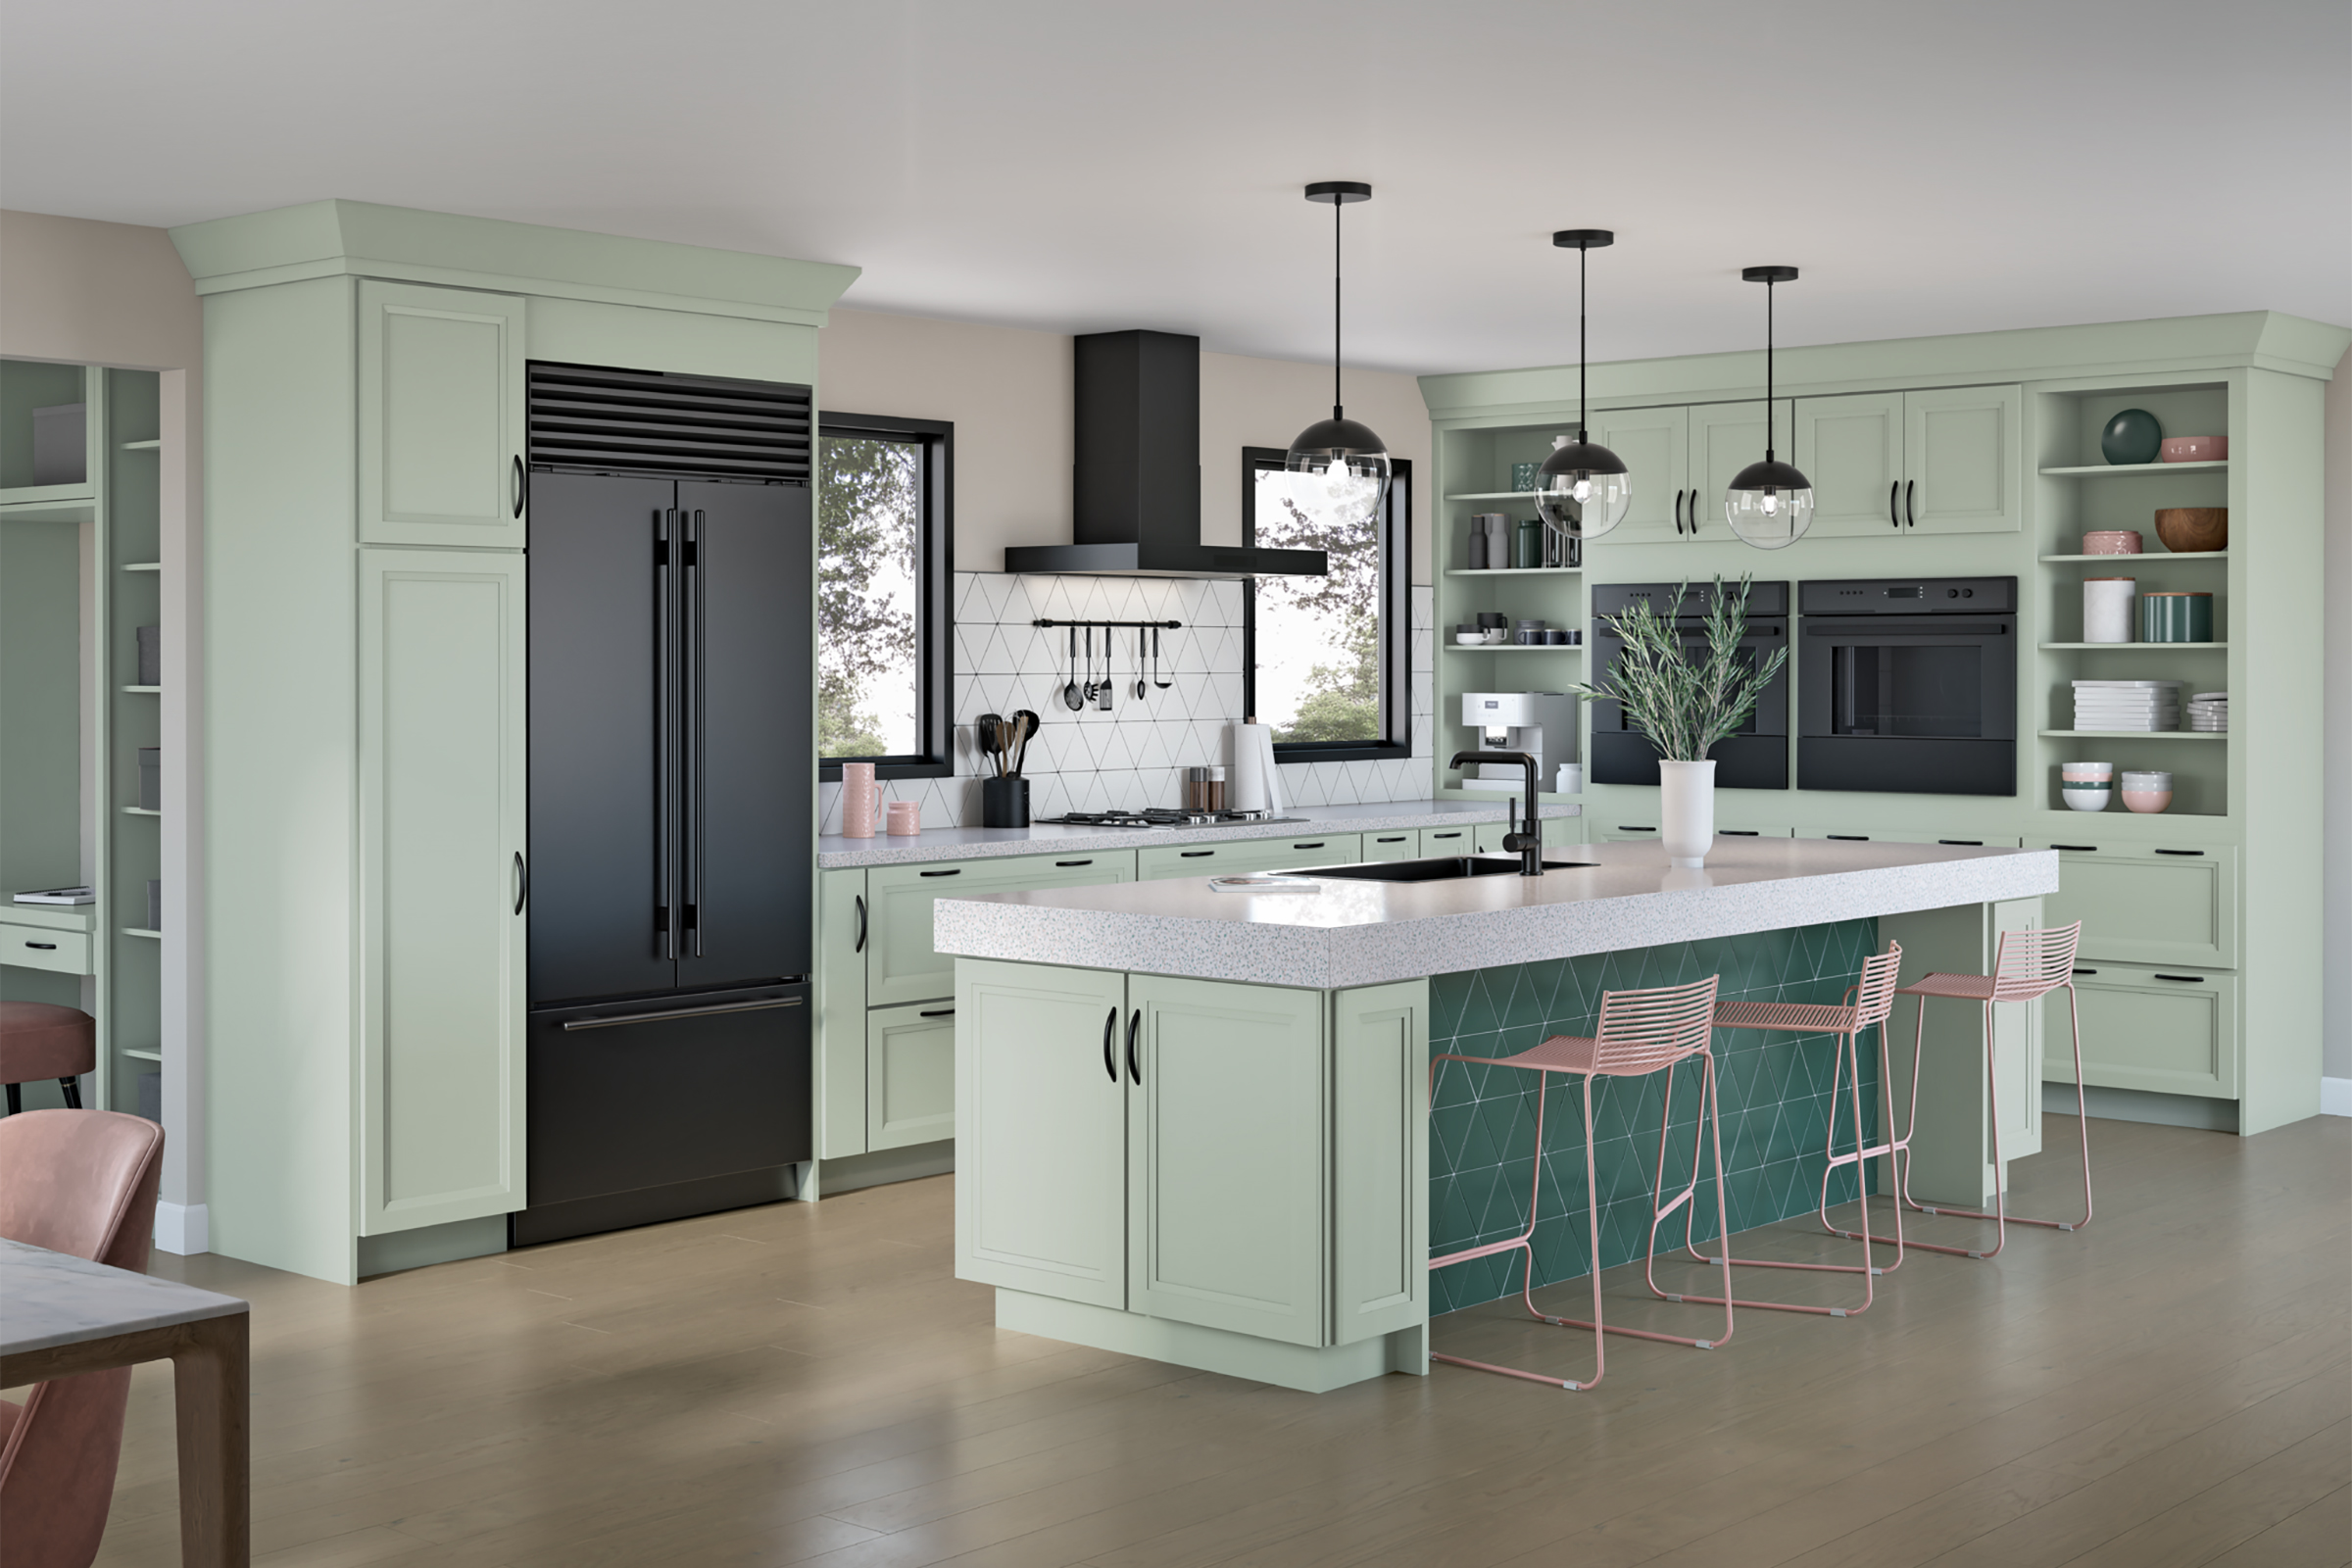 KraftMaid Serenity pastel mint green kitchen cabinets in a contemporary kitchen design